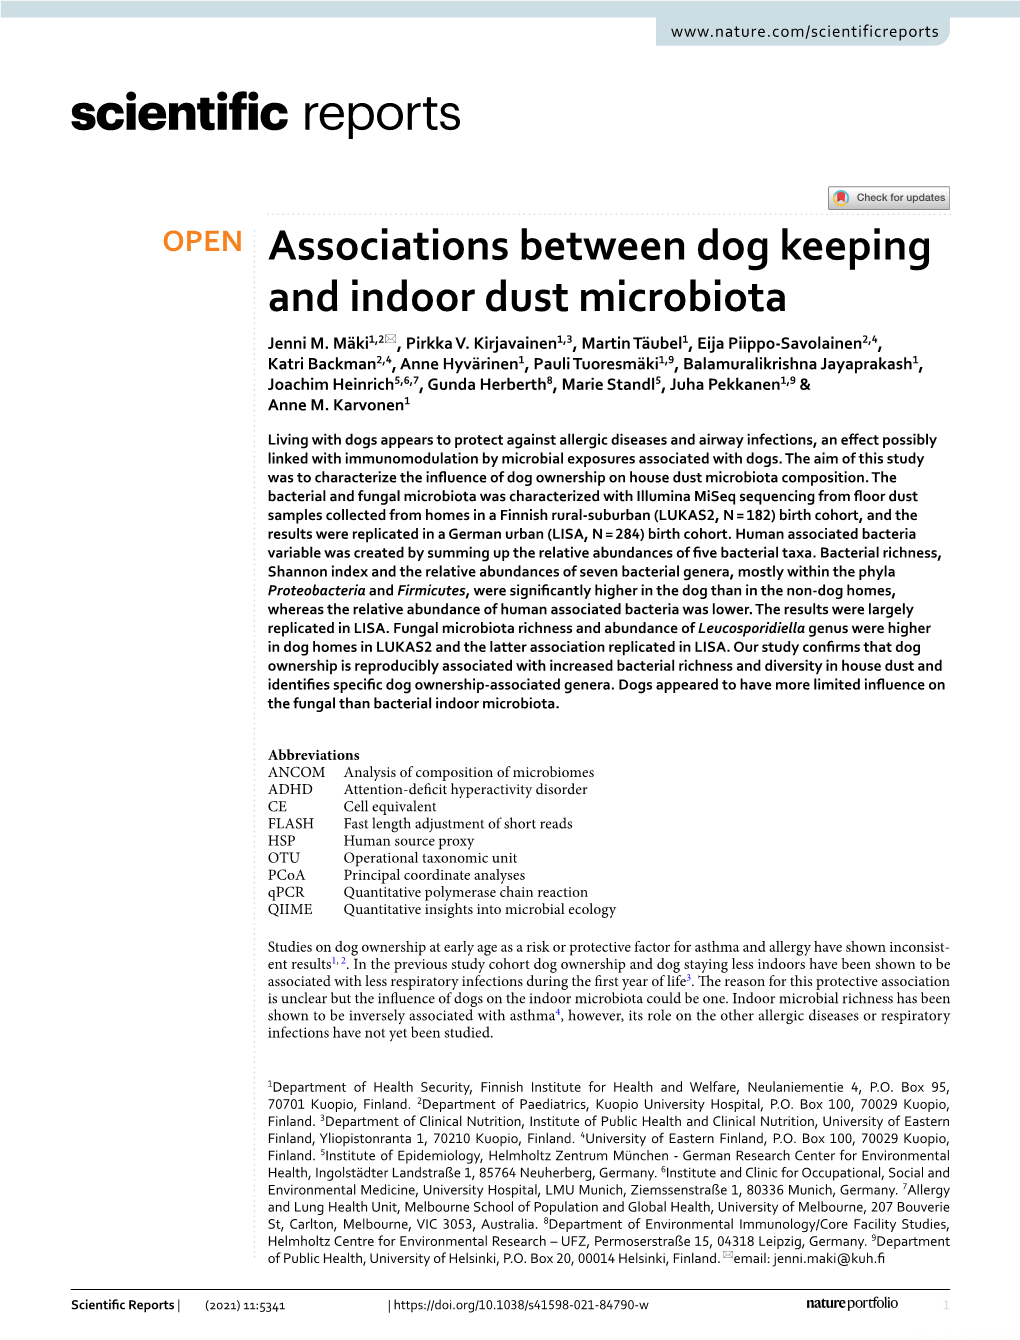 Associations Between Dog Keeping and Indoor Dust Microbiota Jenni M